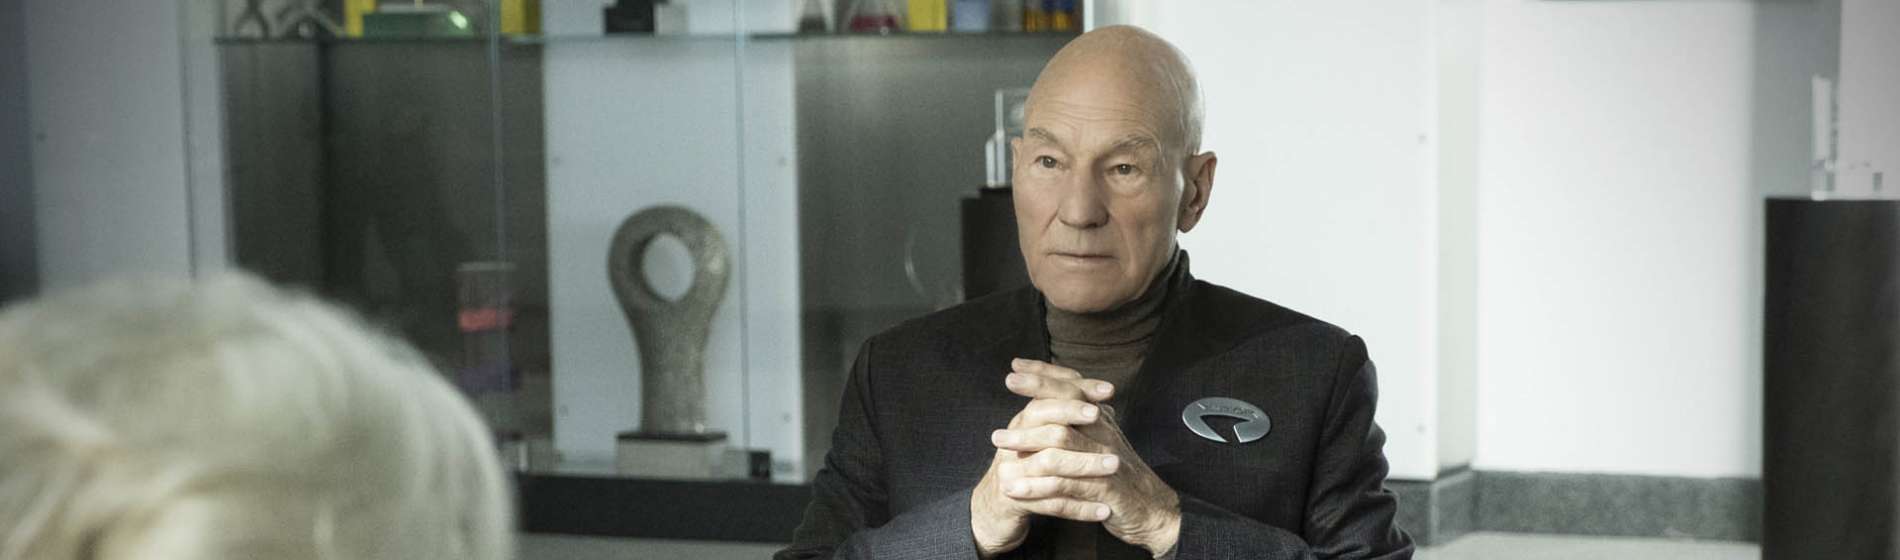 Star Trek: Picard release date